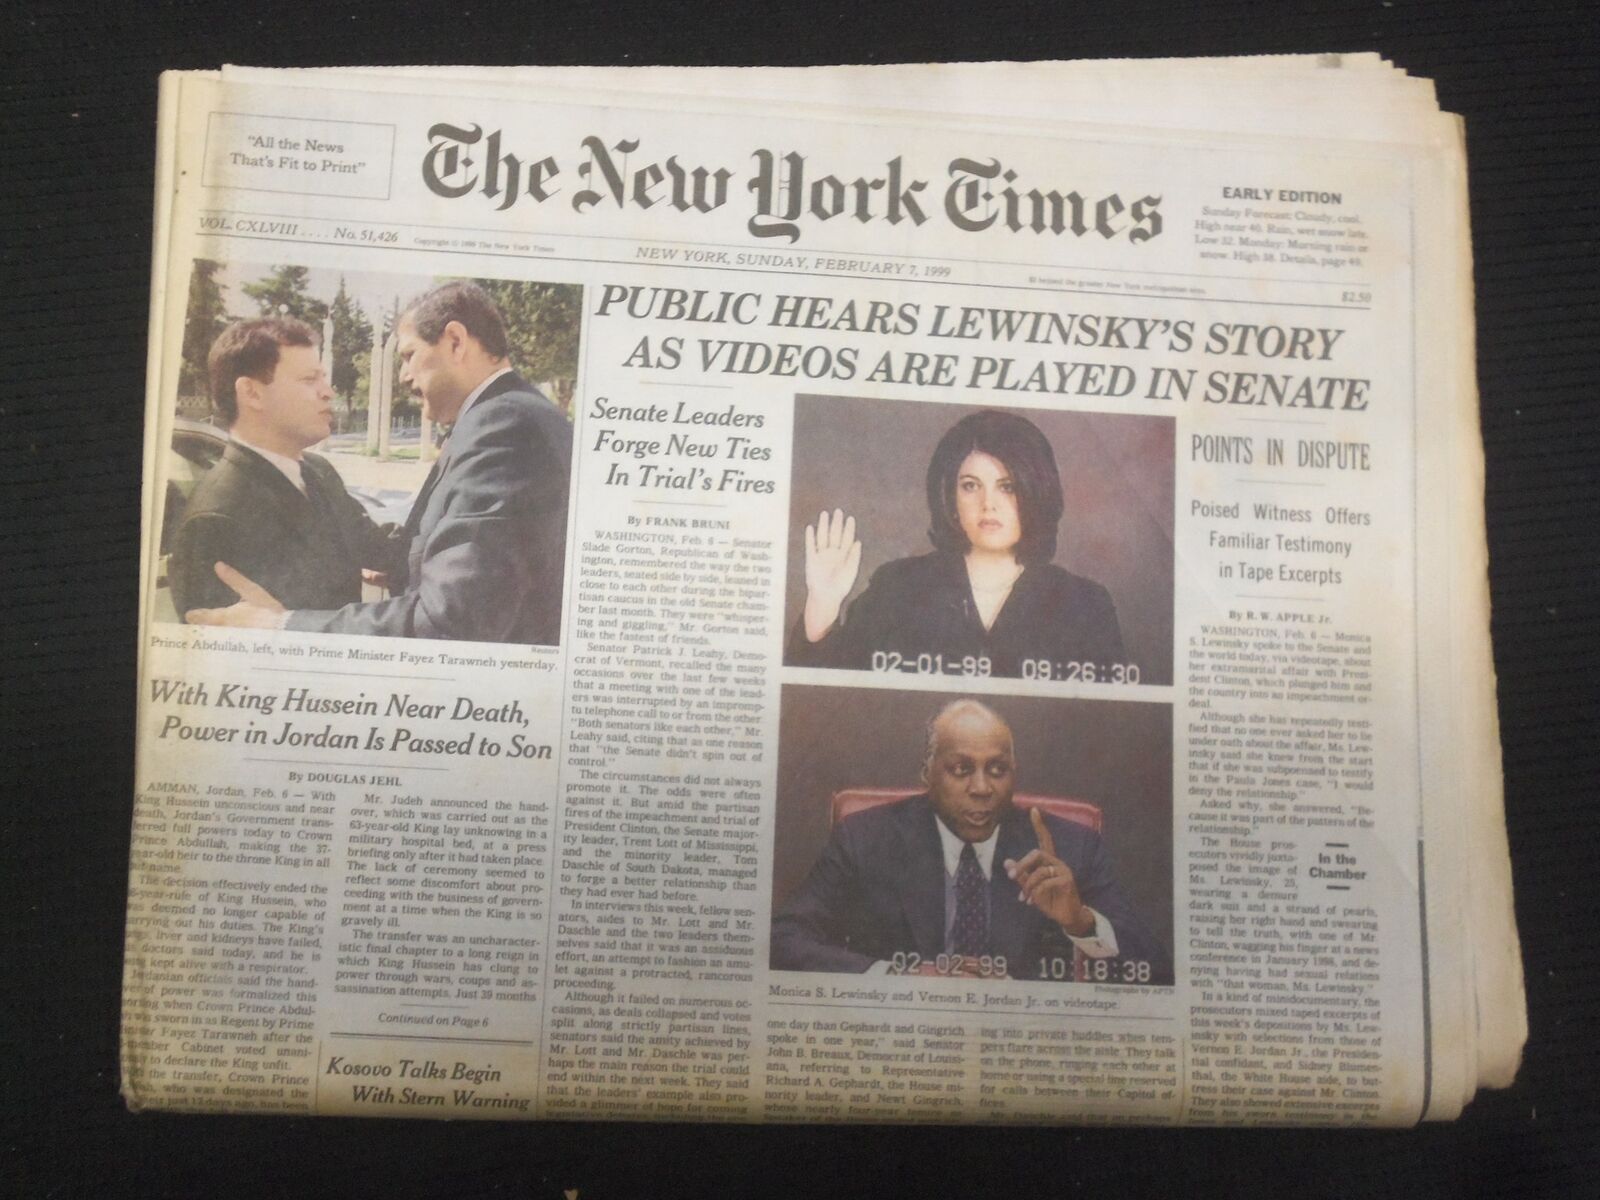 1999 FEB 7 NEW YORK TIMES NEWSPAPER - PUBLIC HEARS LEWINSKY'S STORY - NP 6990